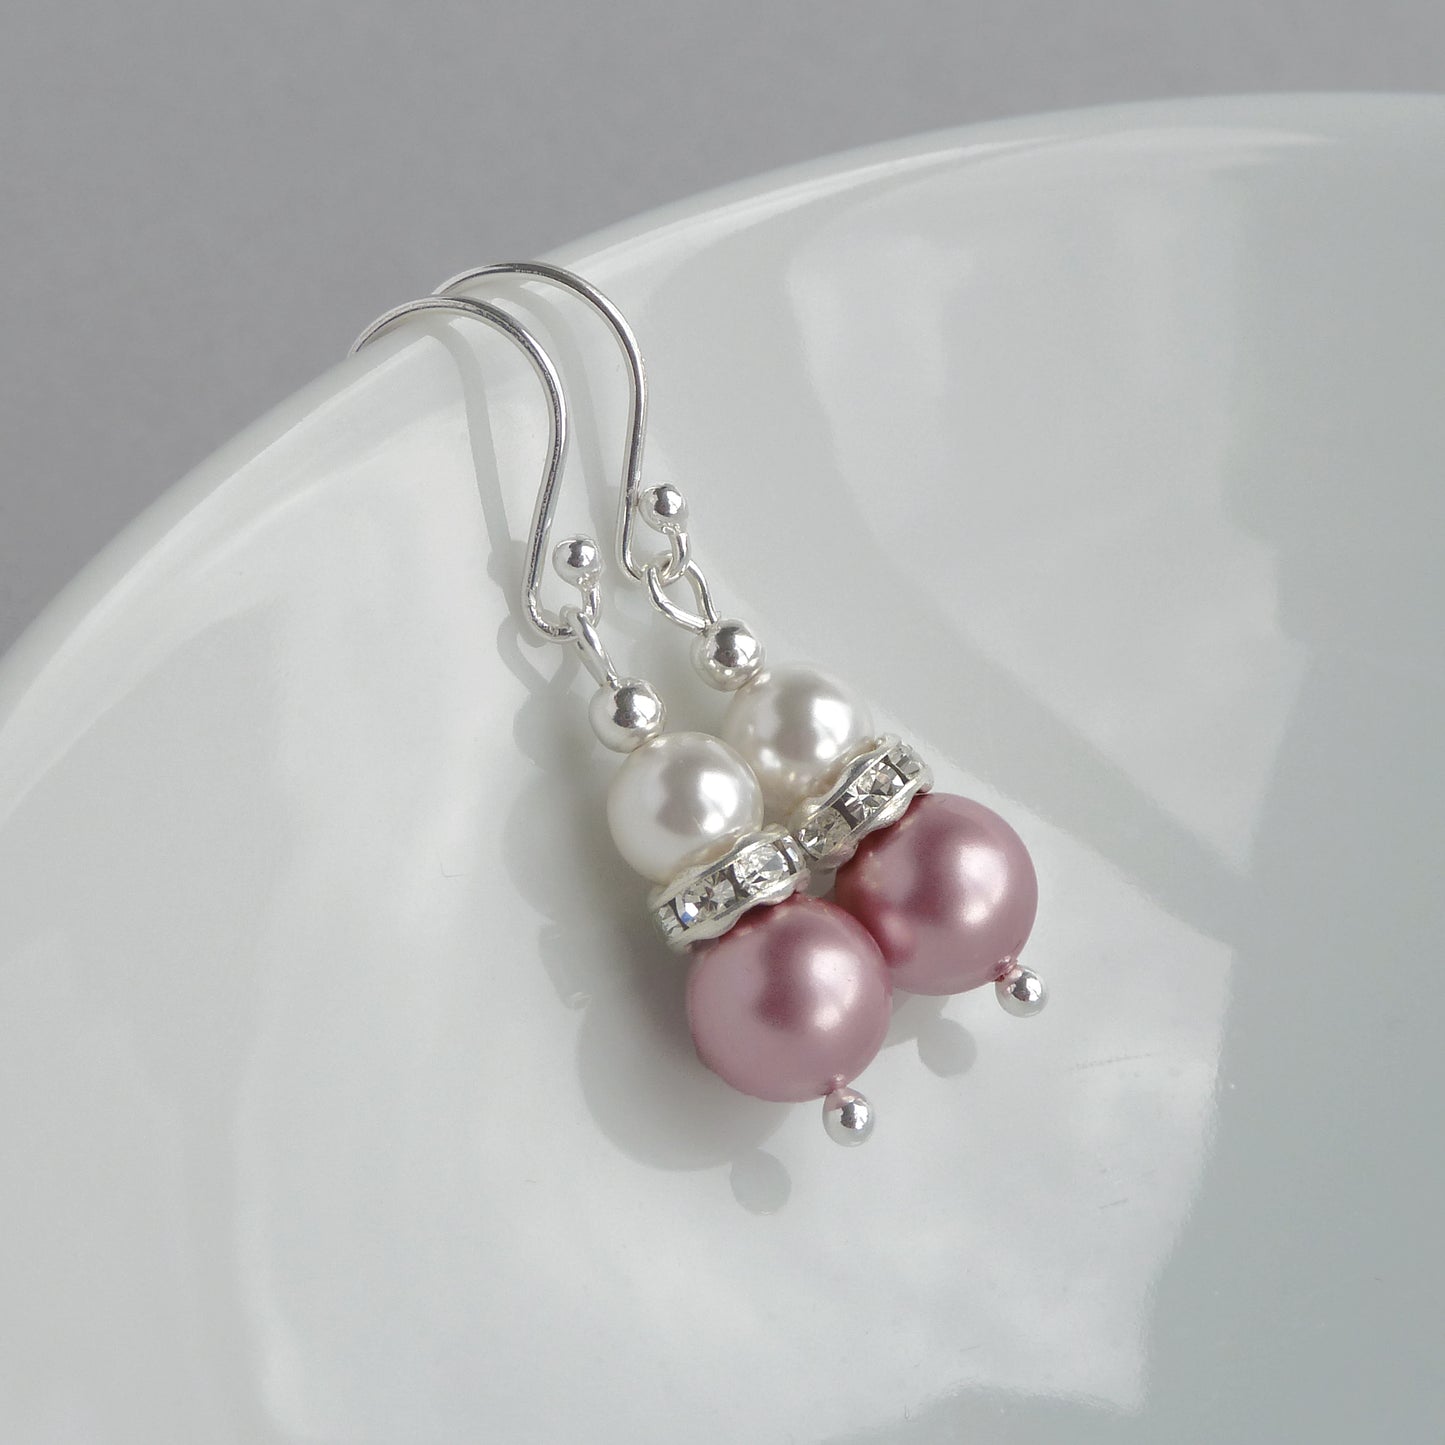 Powder pink pearl bridesmaids earrings